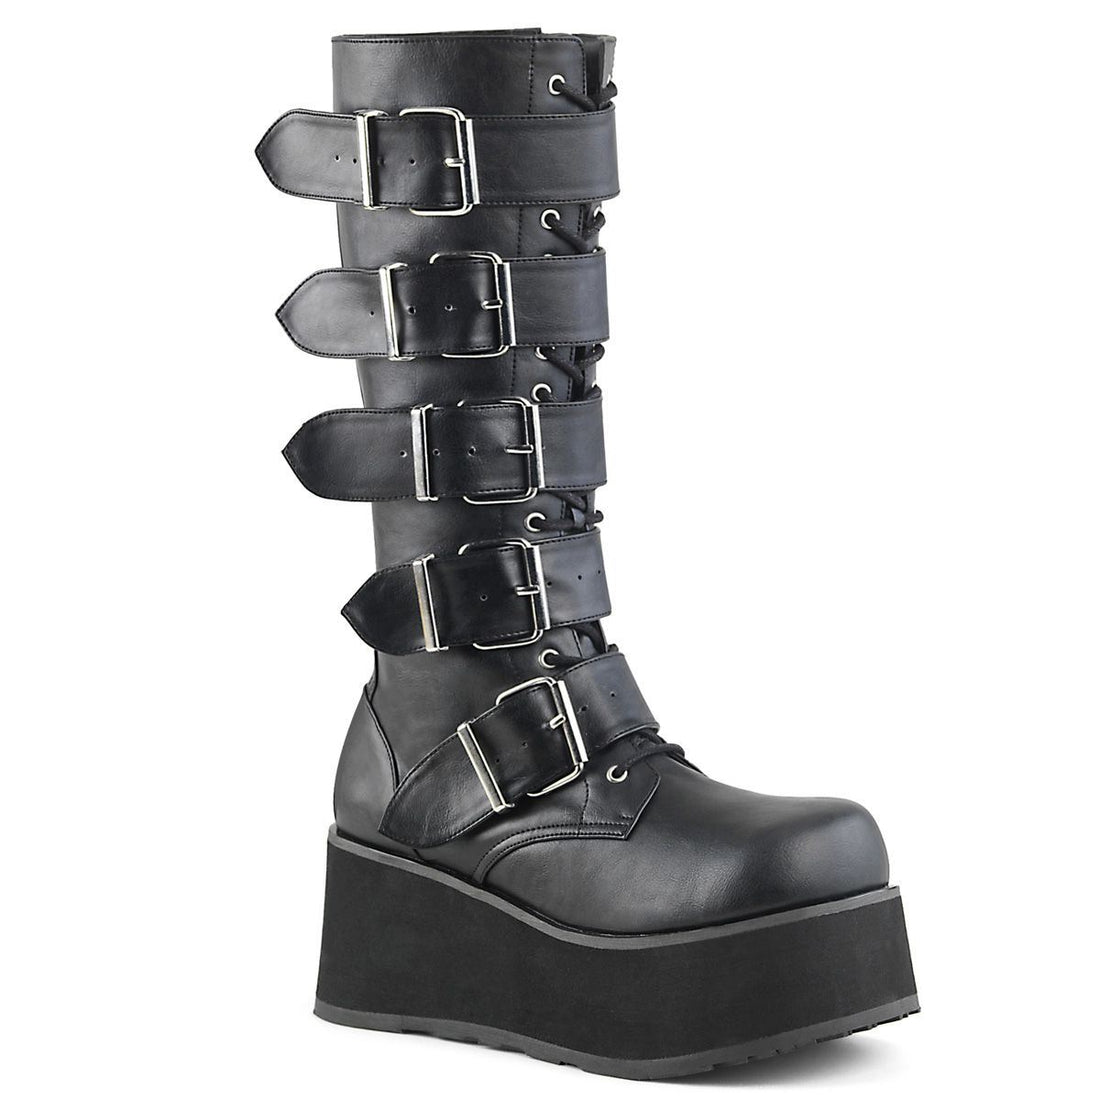 Demonia Trashville 518 Black Vegan Leather Mid Calf Boots - Upperclass Fashions 